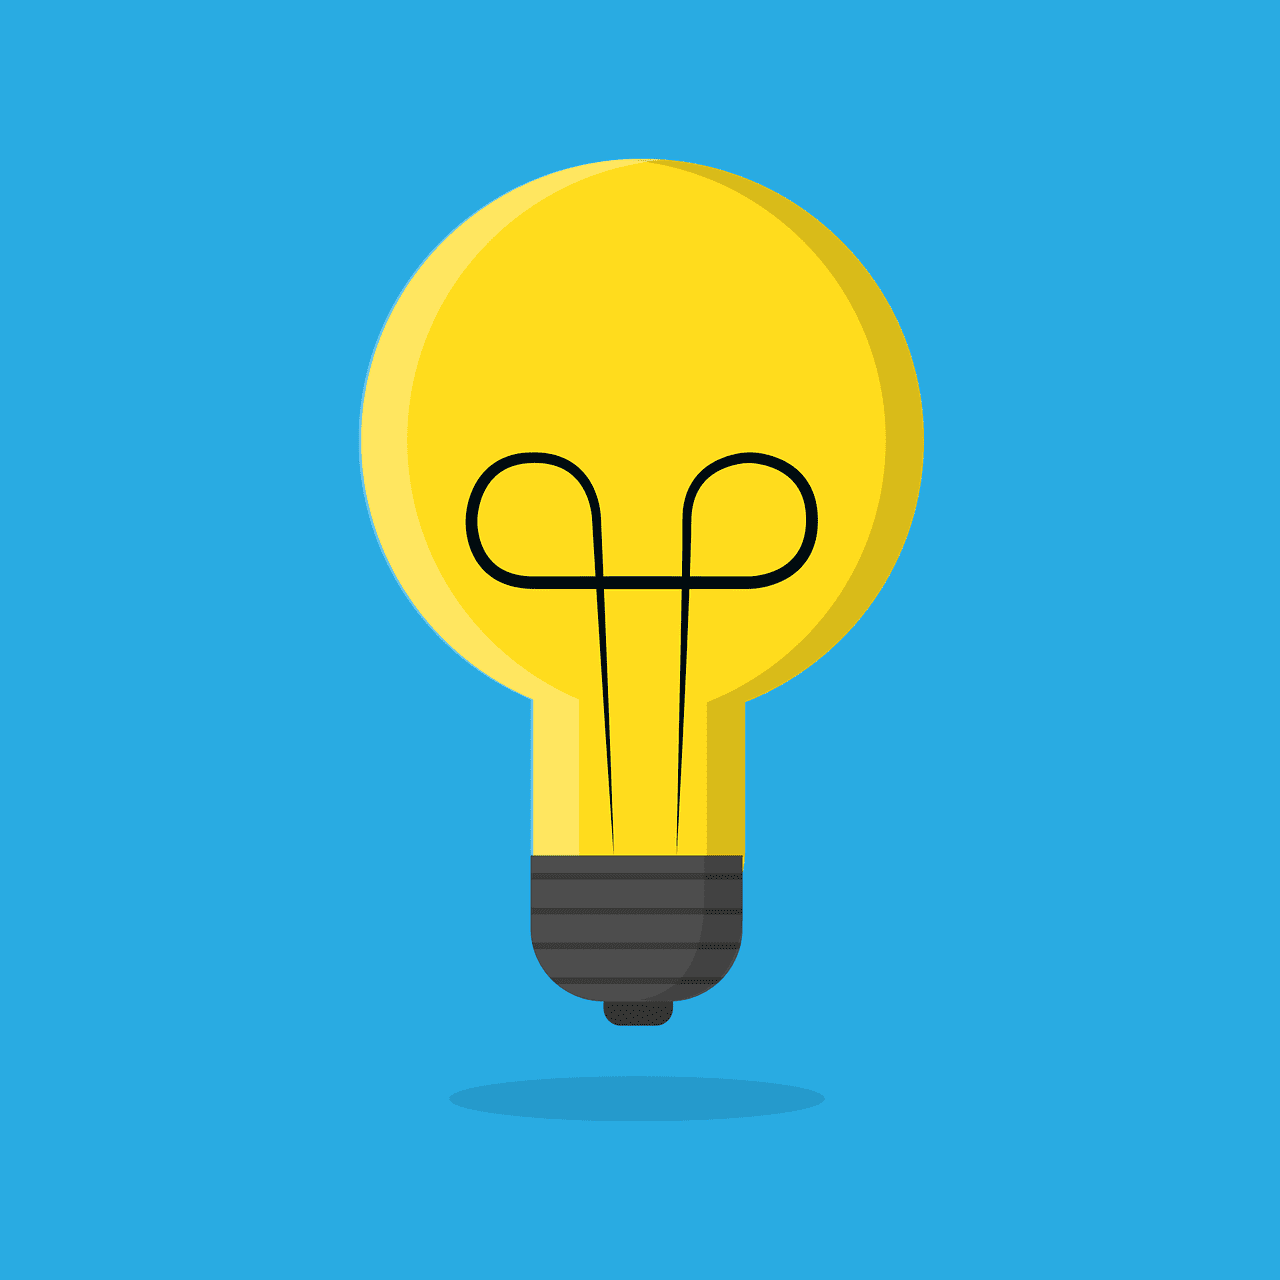 Another light bulb joke below! | Photo: Pixabay/Денис Марчук